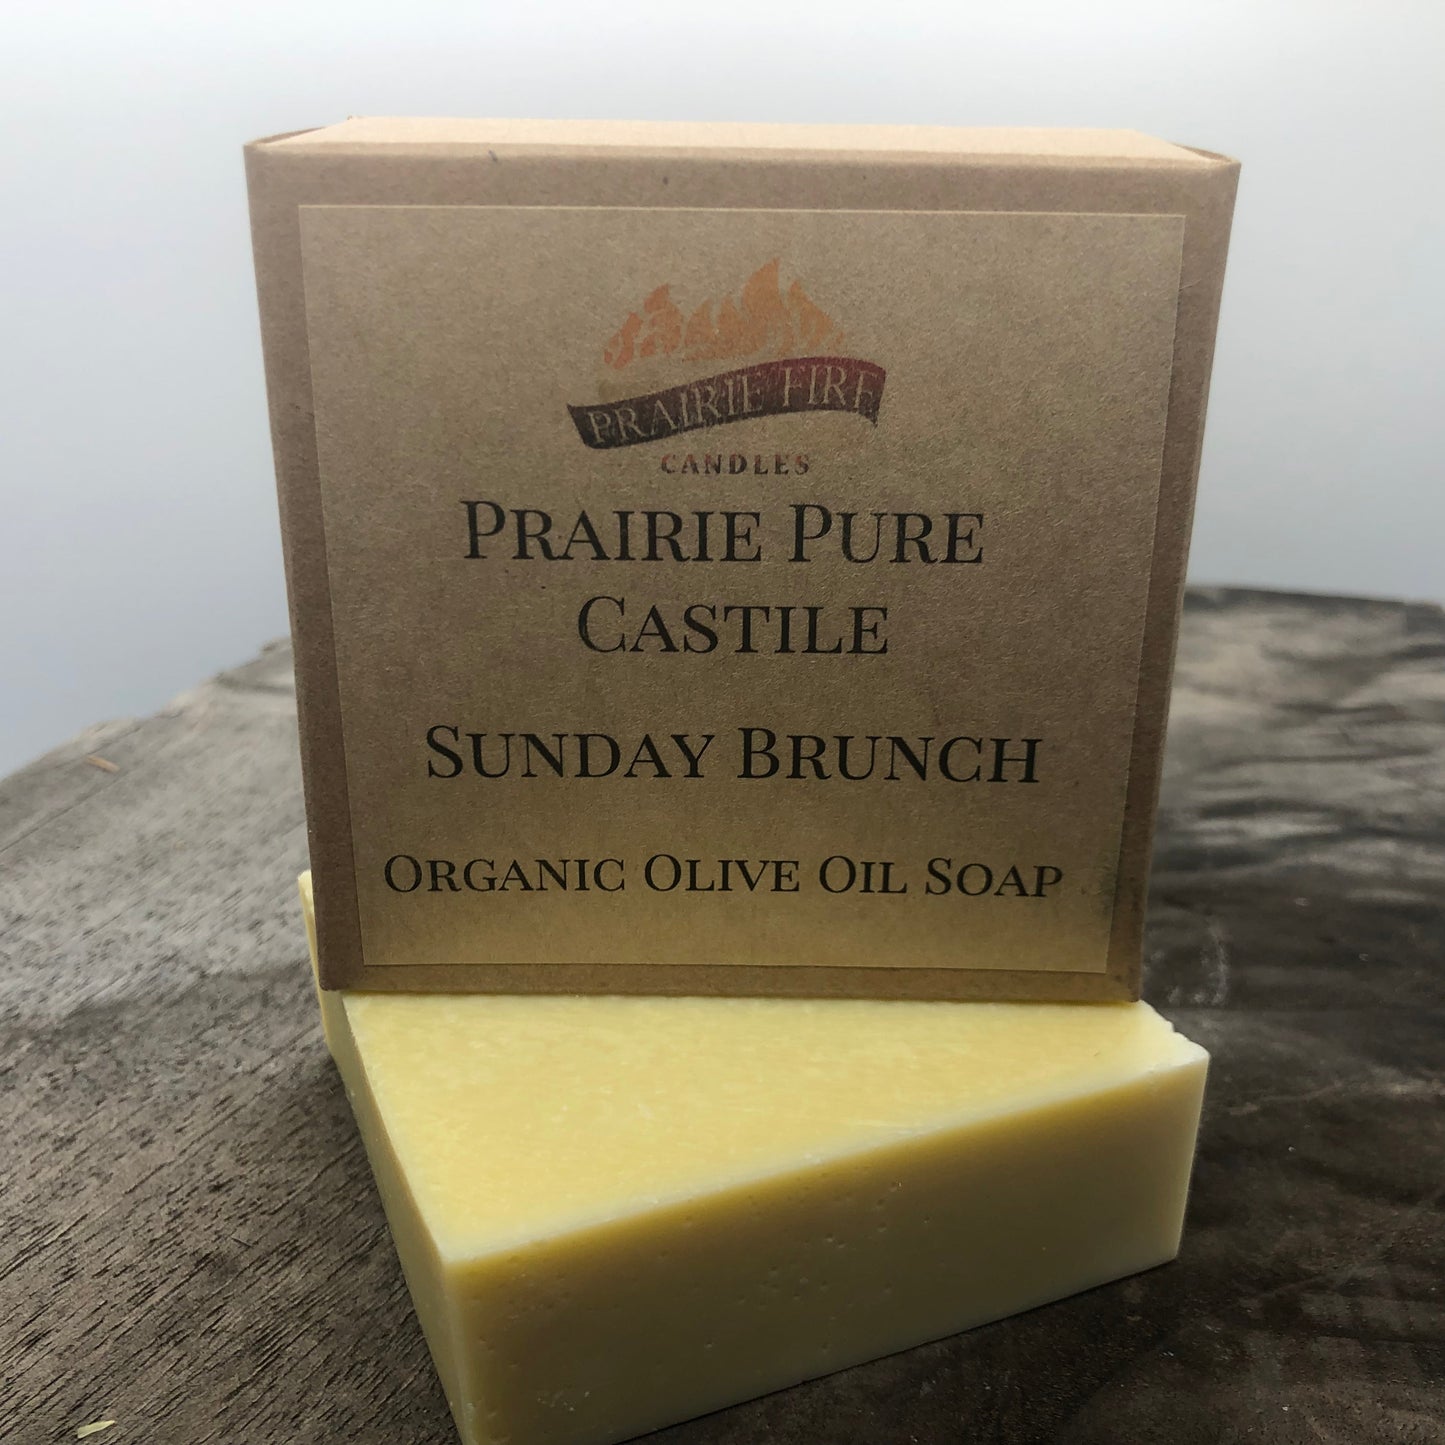 Sunday Brunch Real Castile Organic Olive Oil Soap for Sensitive Skin - Dye Free - 100% Certified Organic Extra Virgin Olive Oil